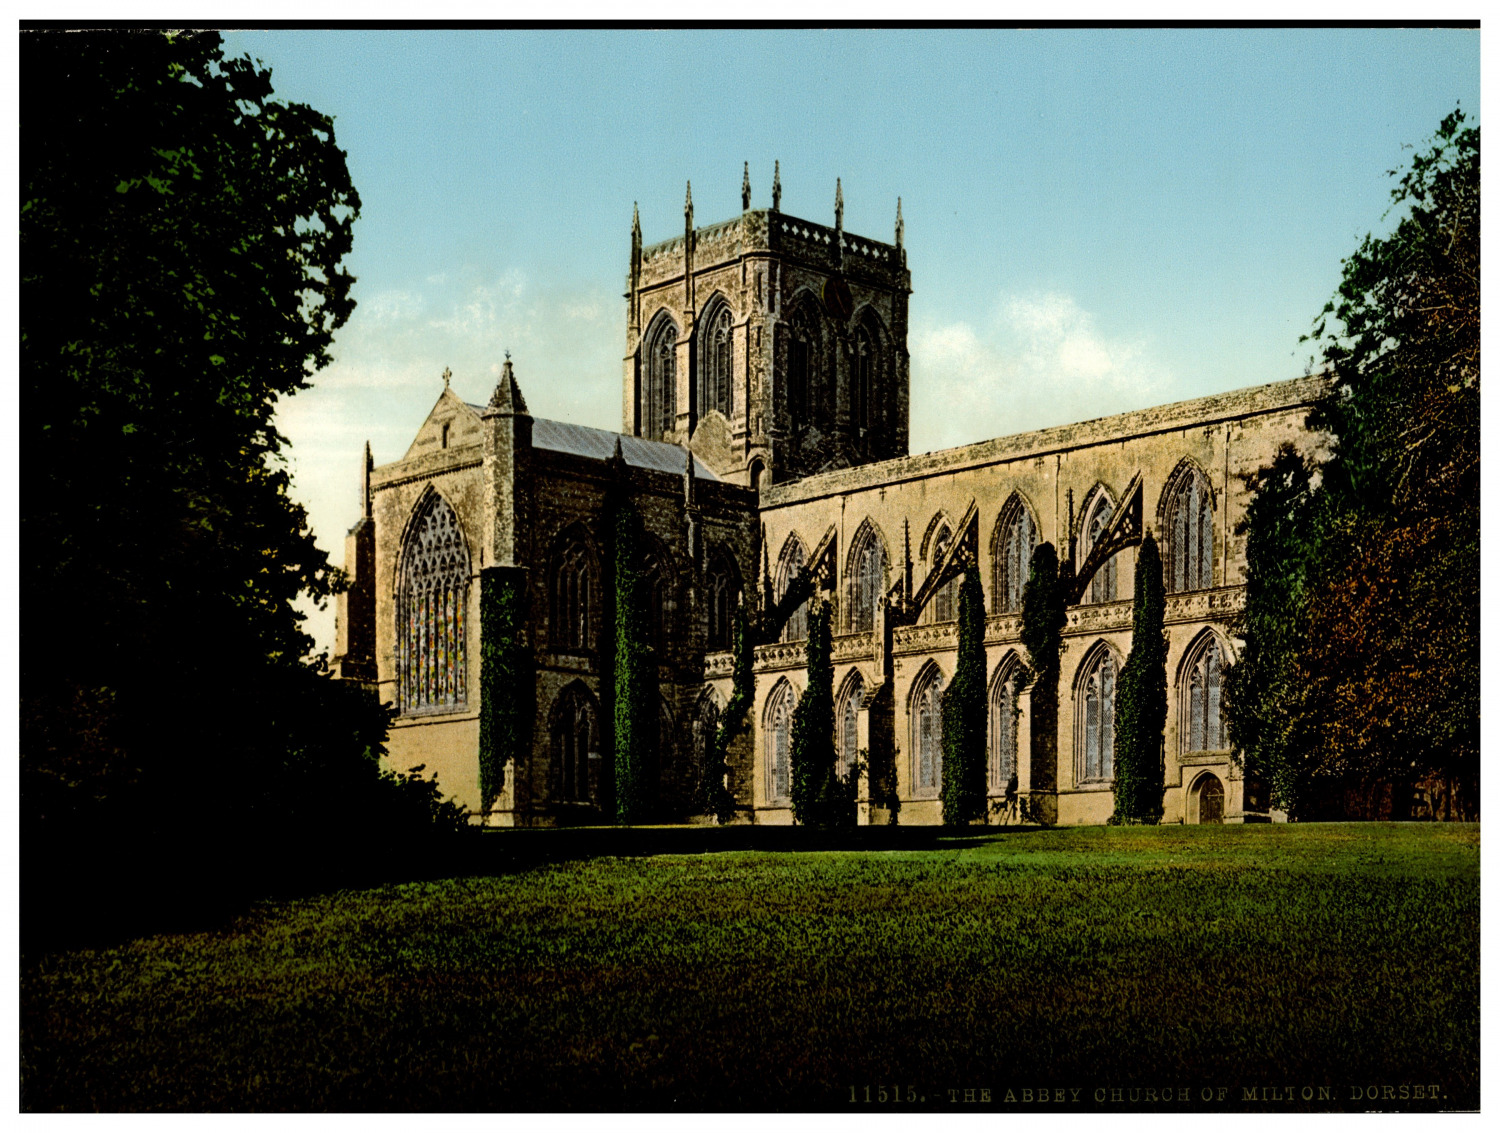 England. Milton. The Abbey Church of Milton Dorset. Vintage Photochrome by P.Z